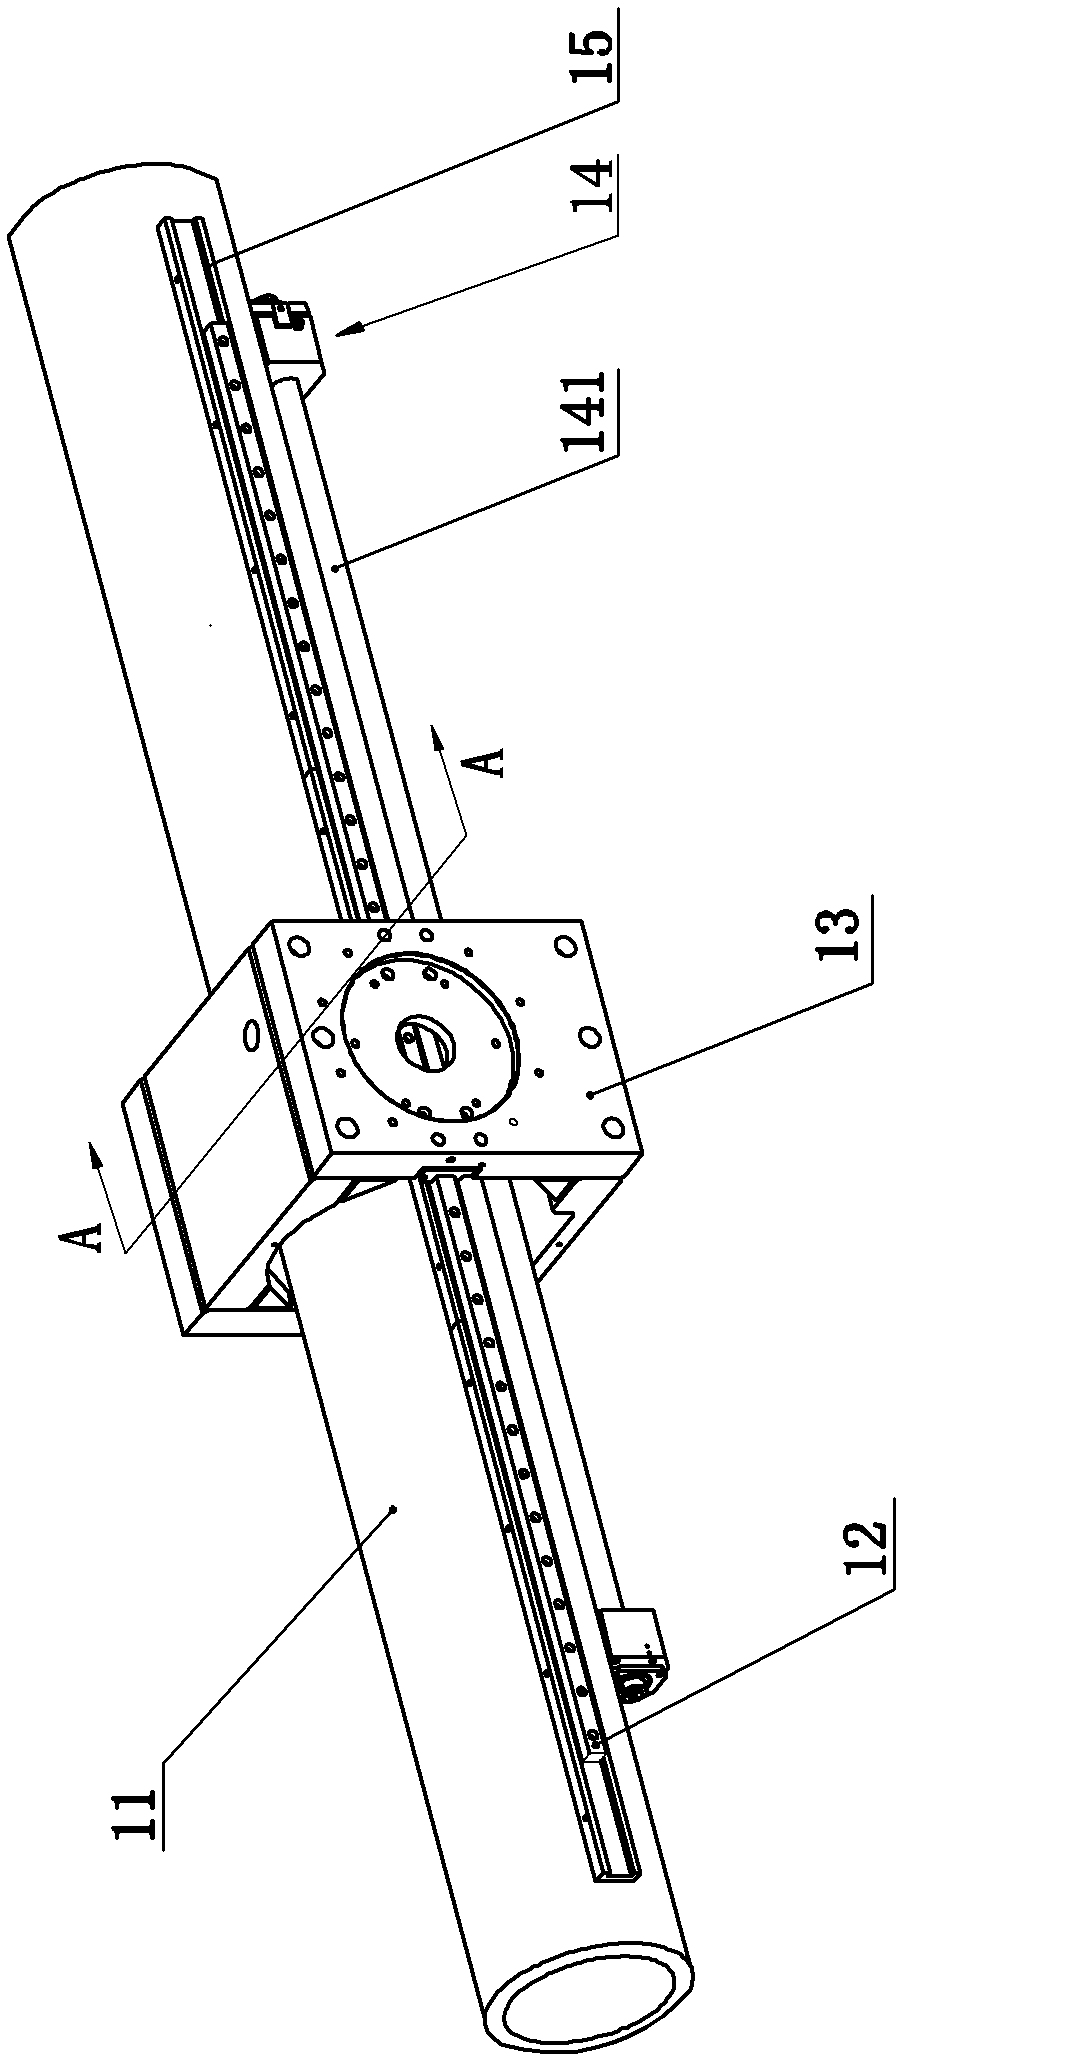 Orthogonal three-axis machine tool